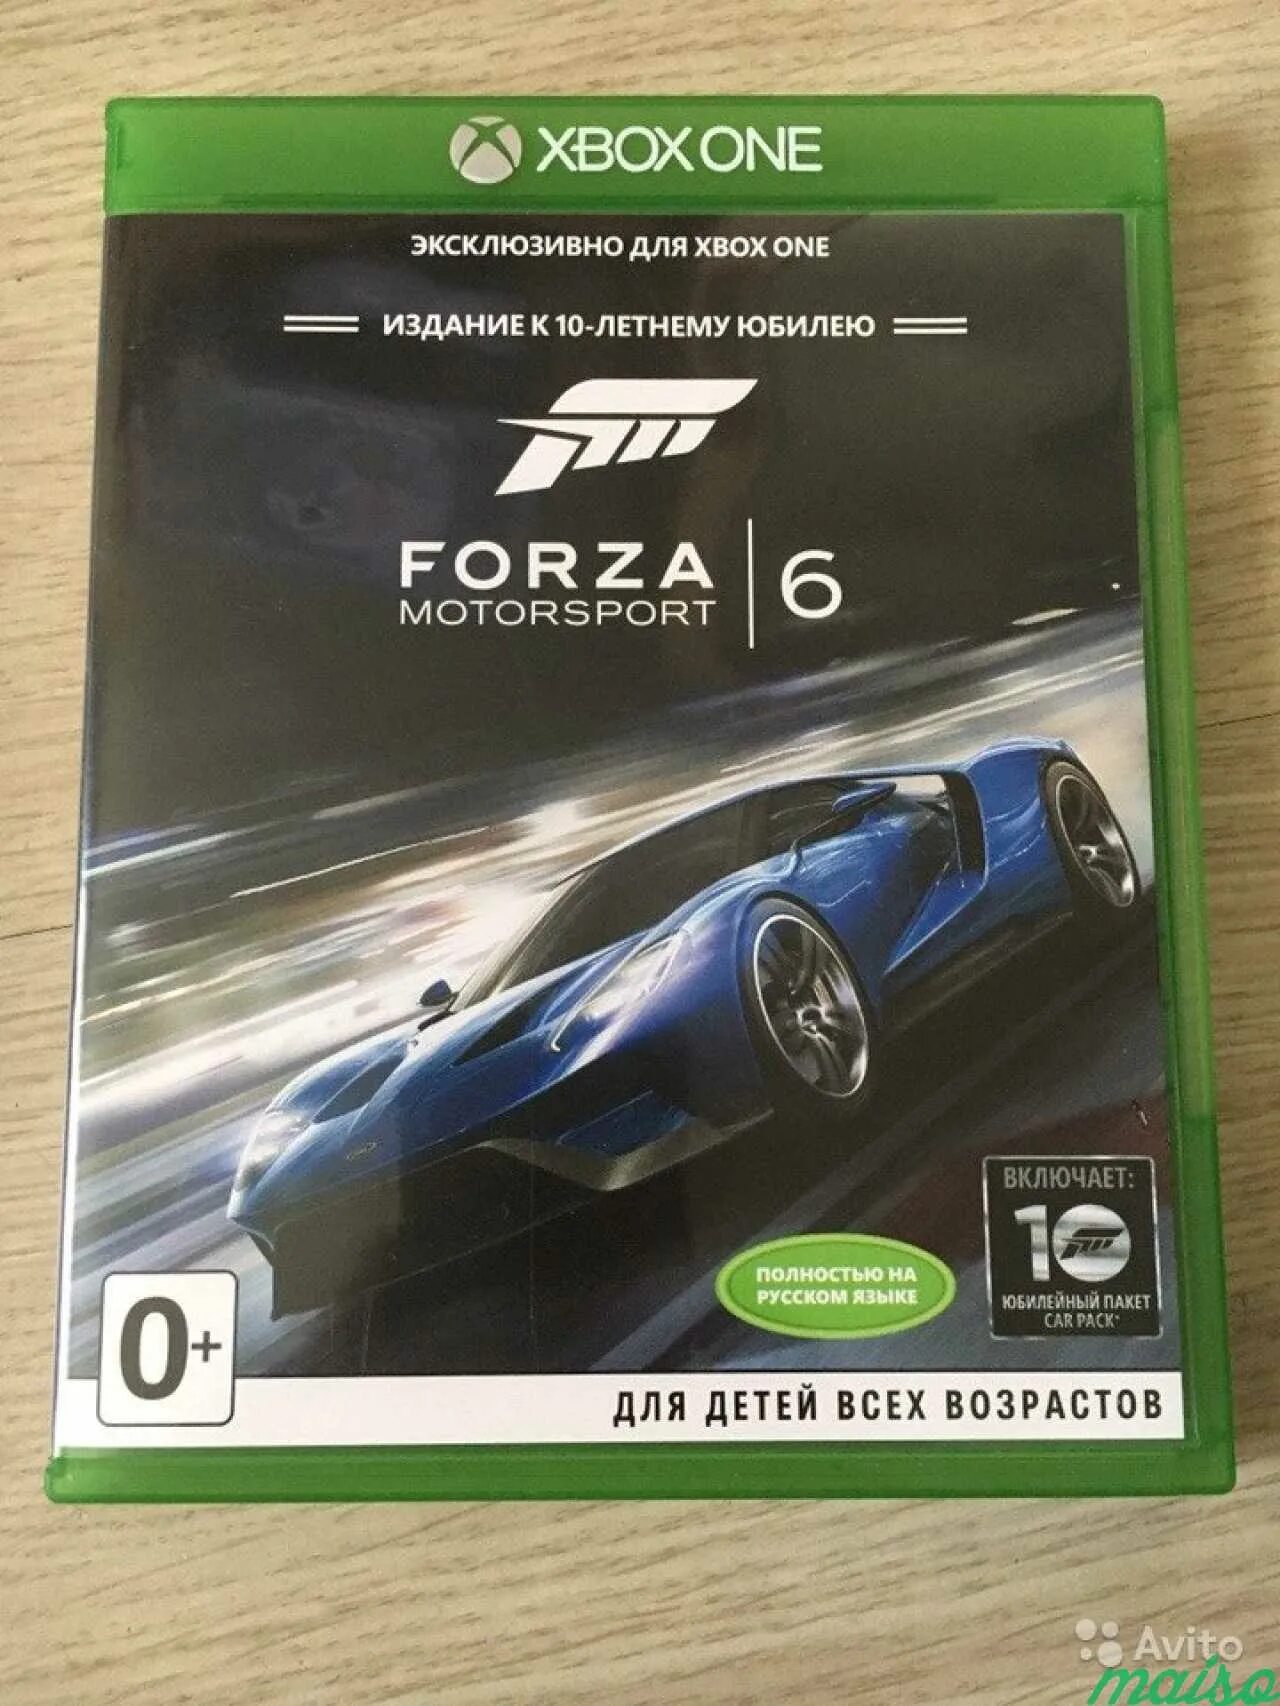 Forza Motorsport 6 Xbox one. Xbox one Forza Motorsport. Forza Motorsport 6 диск. Forza Motorsport Xbox. Форза хбокс